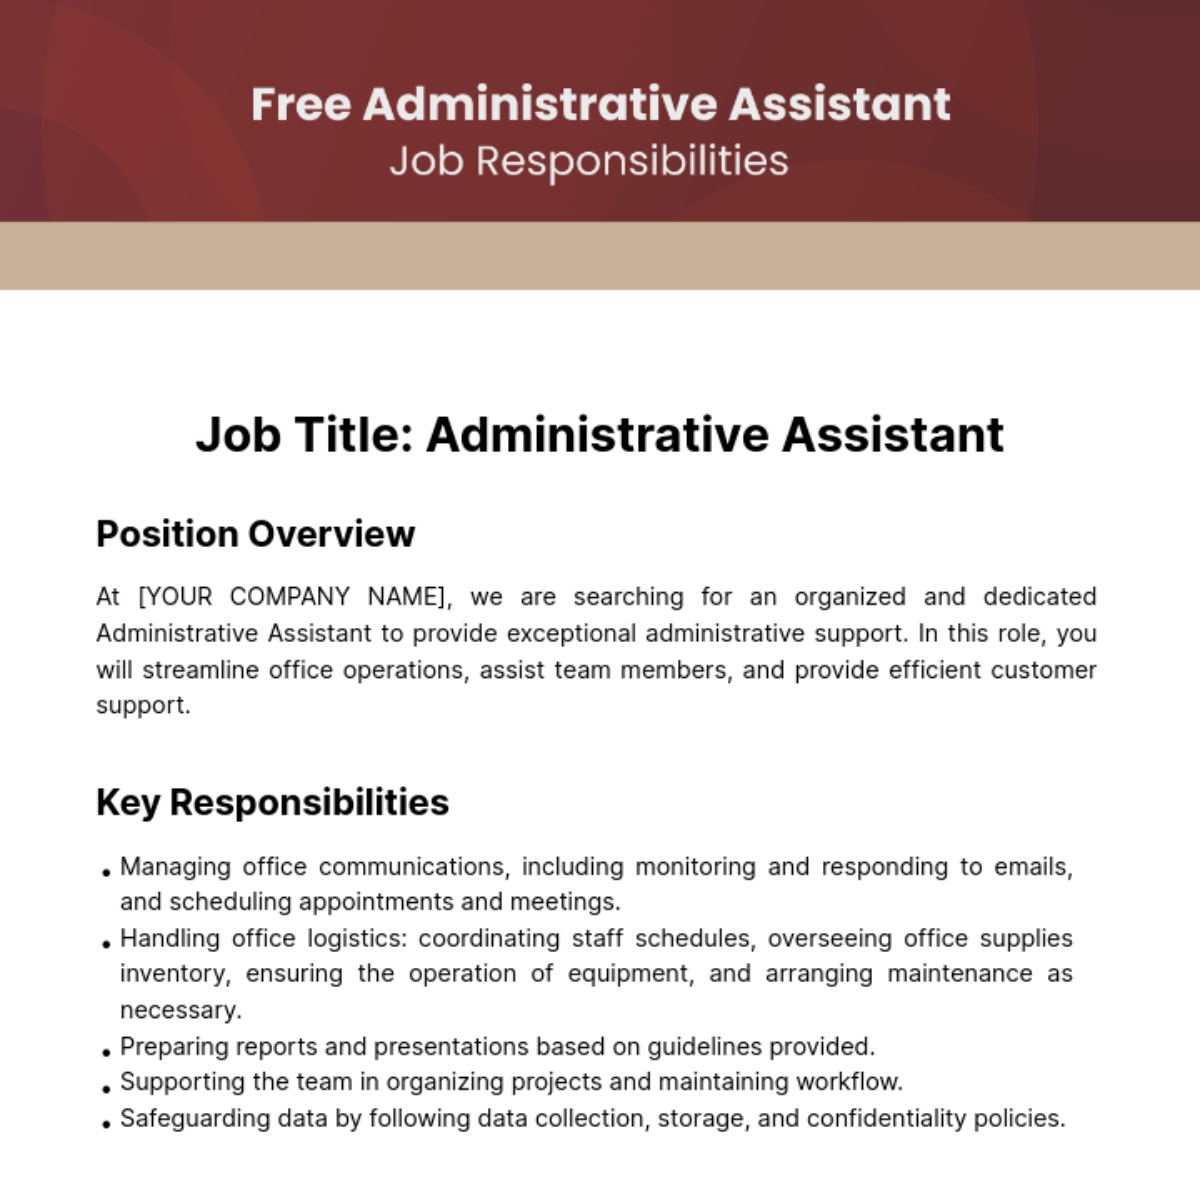 Free Administrative Assistant Job Responsibilities Template